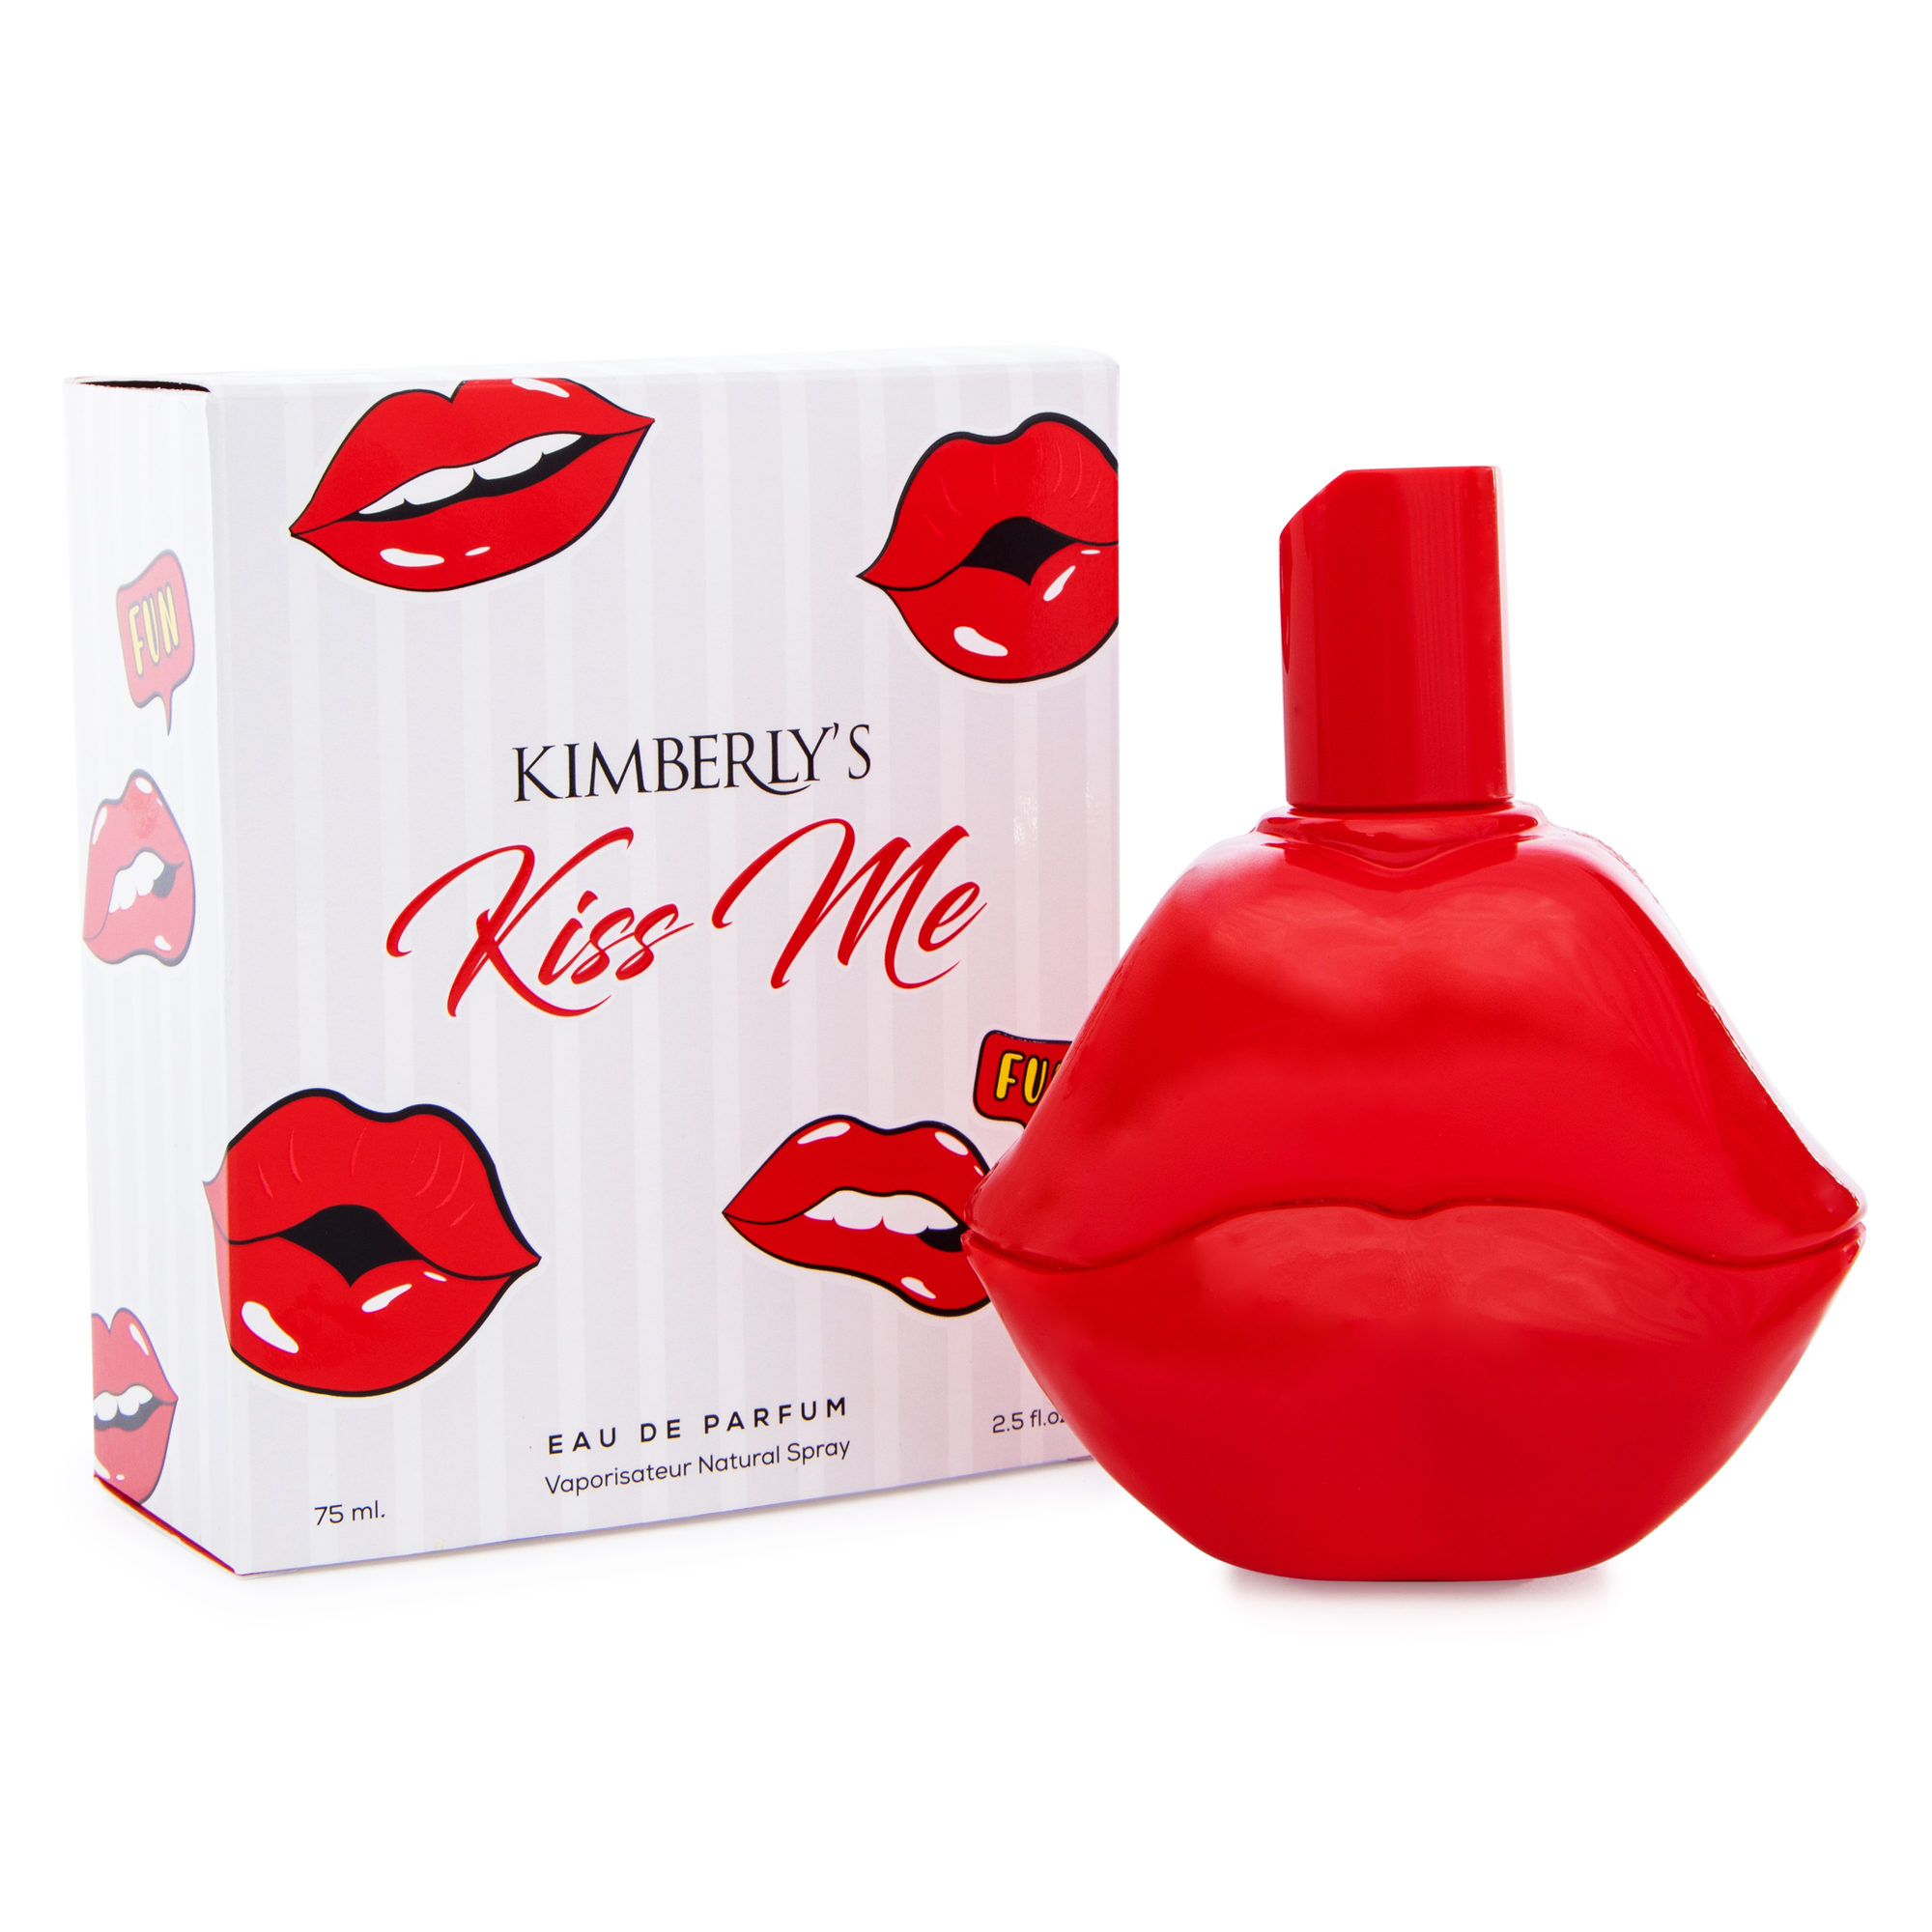 kimberly's kiss me eau de parfum 2.5oz